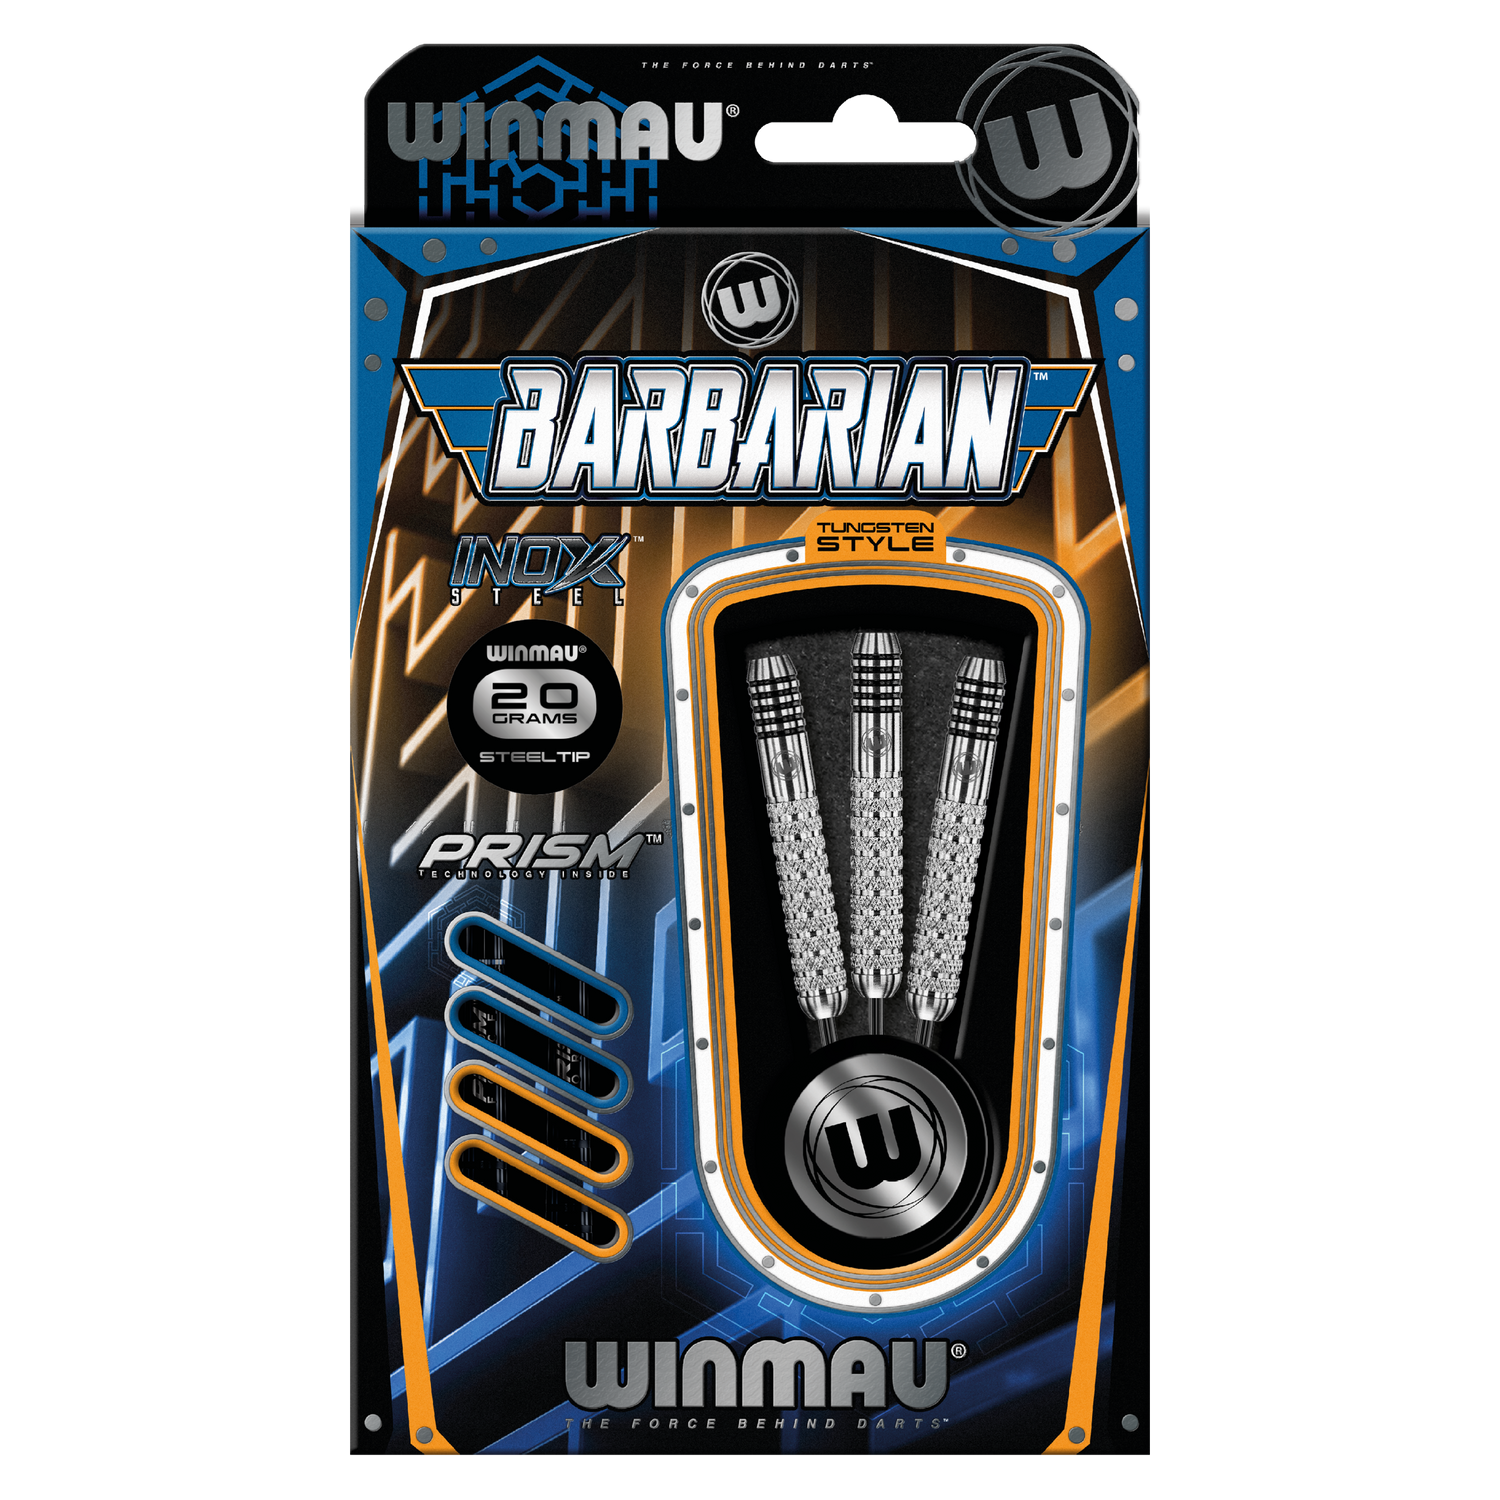 Winmau Barbarian darts 20g Inox Steel